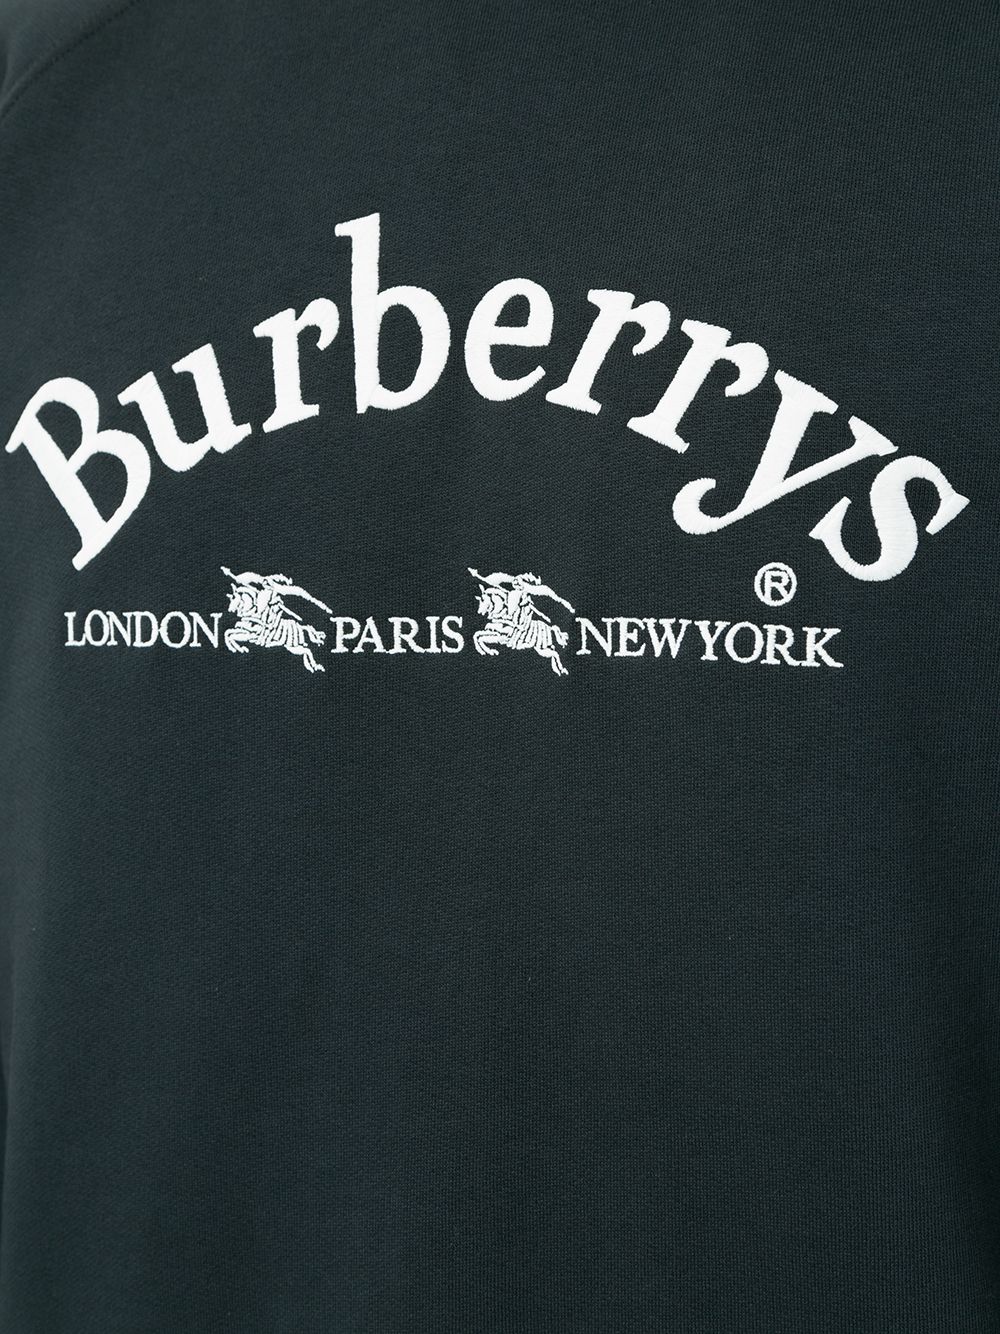 burberrys london paris new york